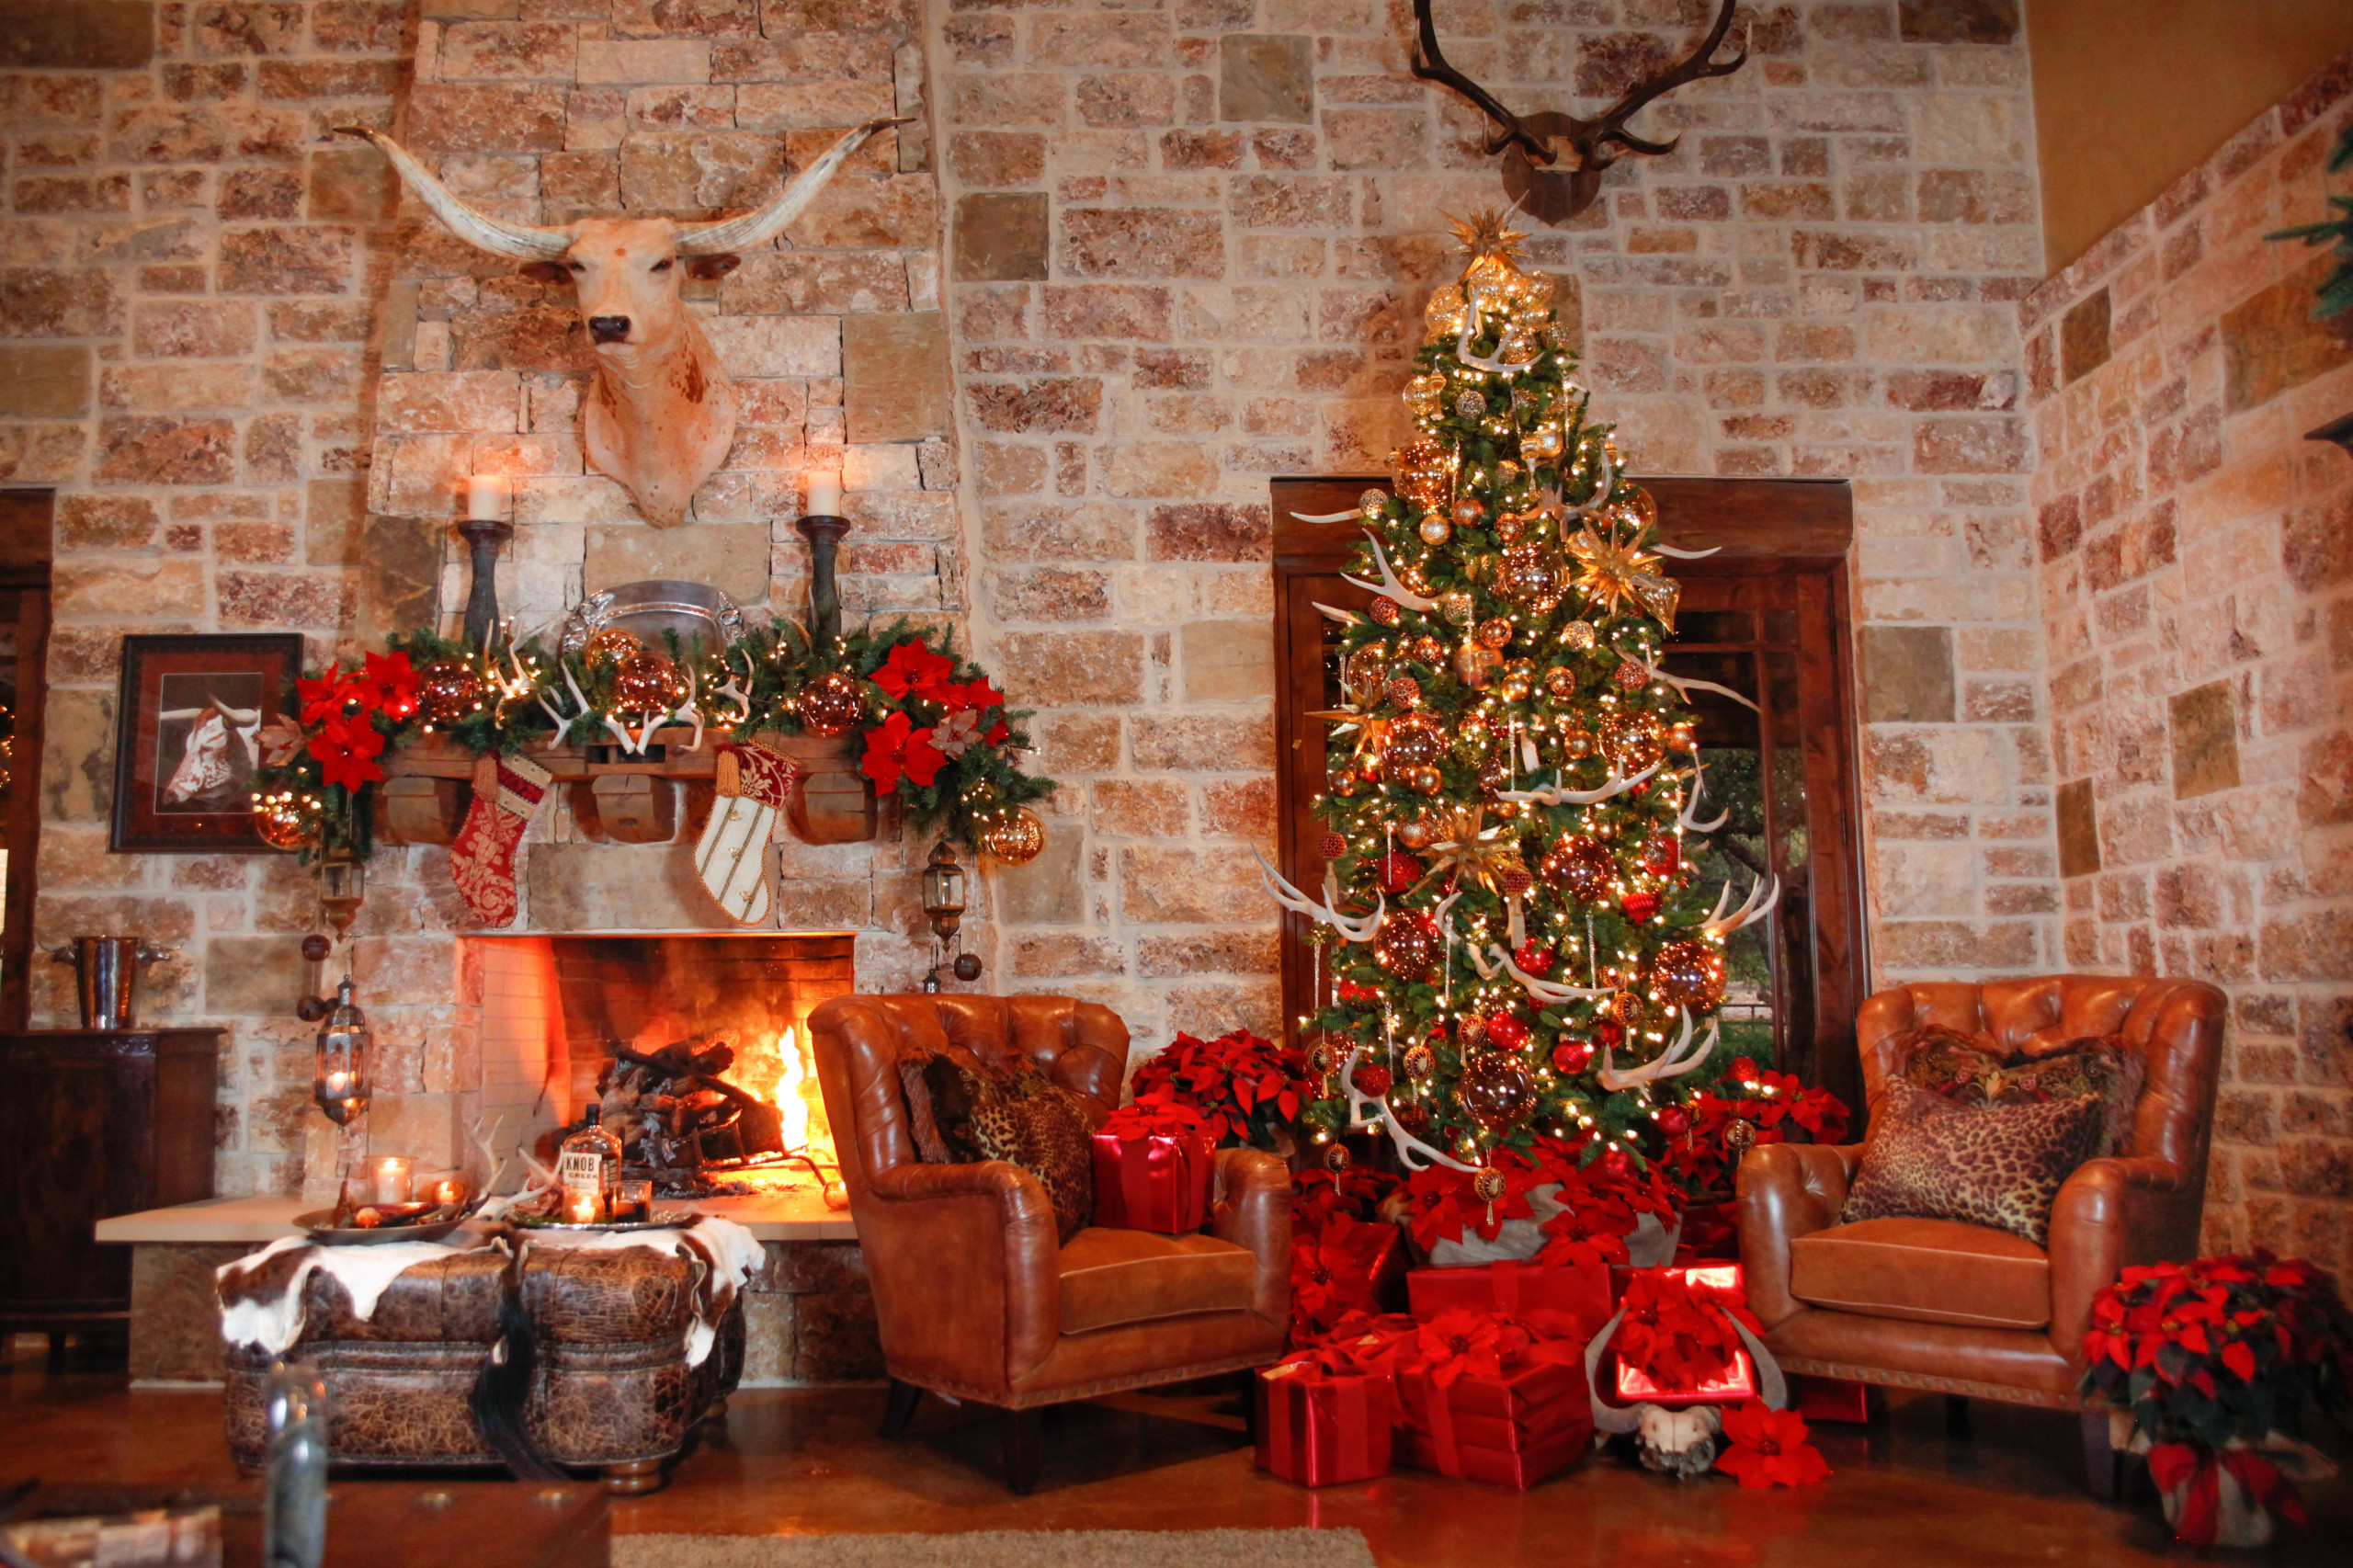 Kilgore Ranch Christmas | Kilgore, Texas